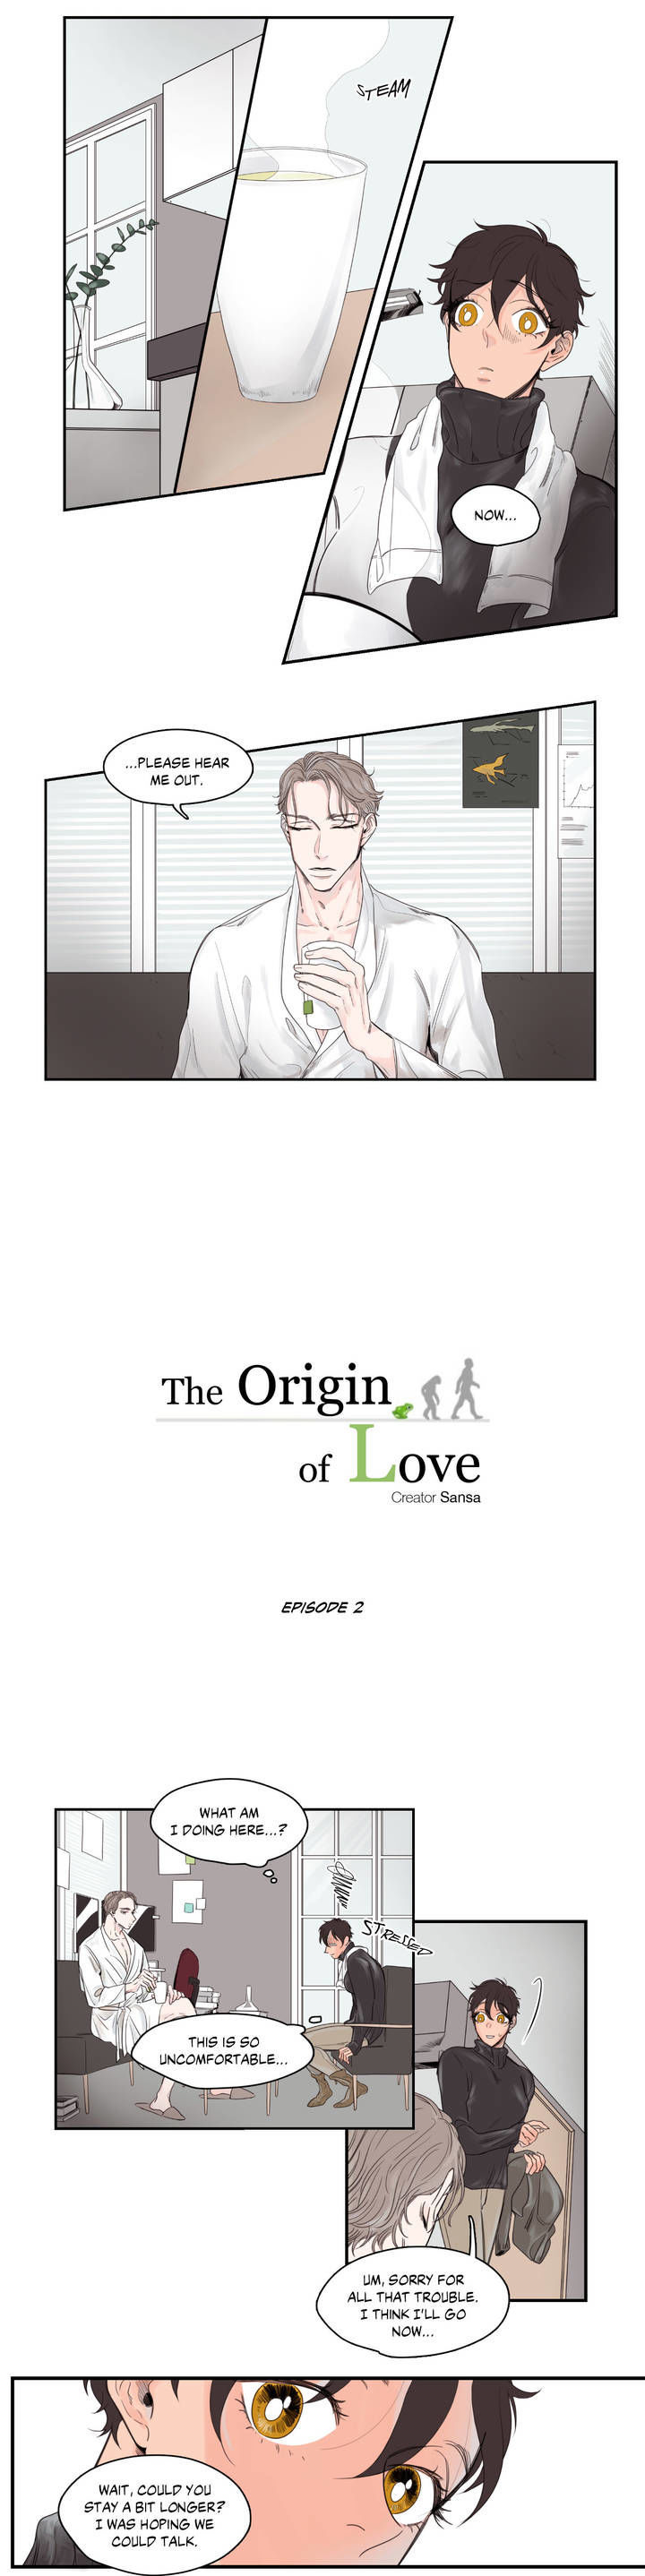 The Origin of Love 2